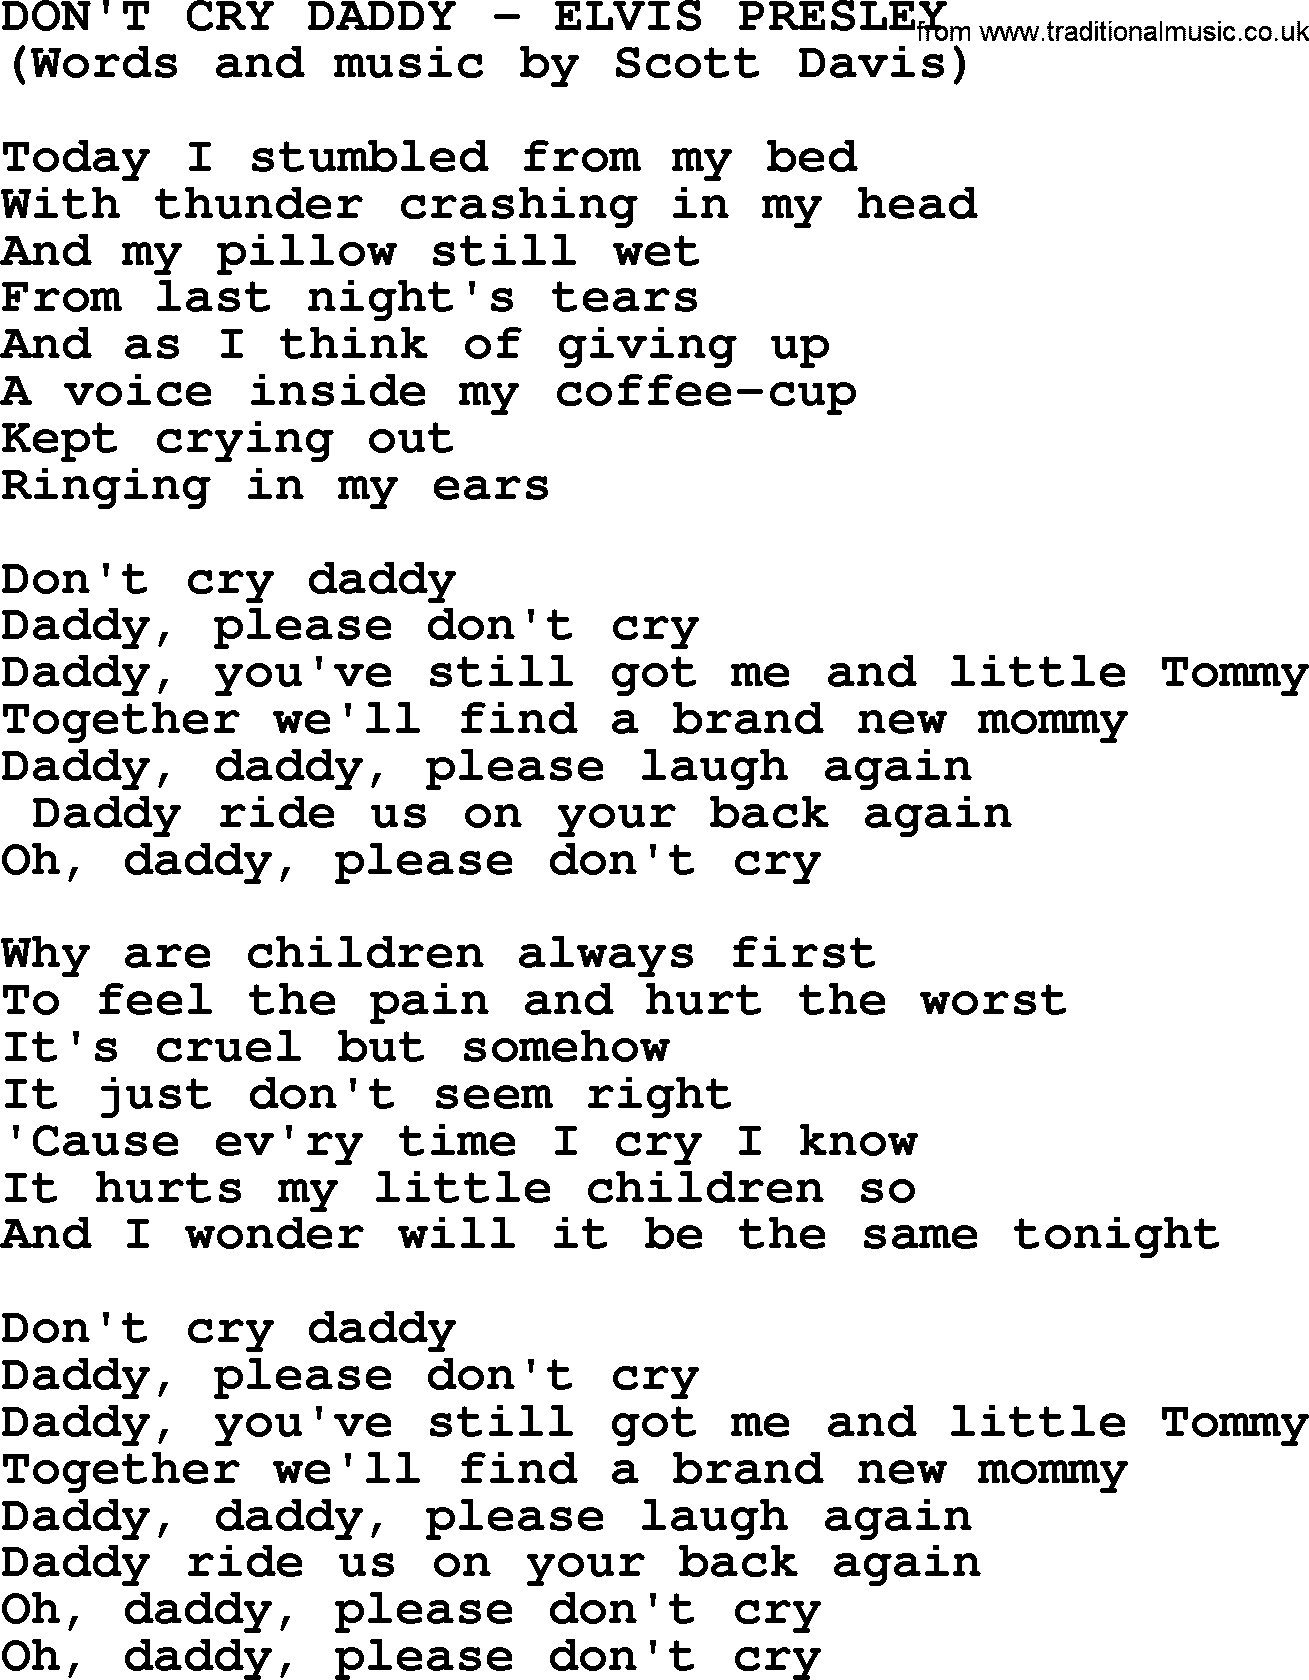 Elvis Presley song: Don't Cry Daddy lyrics